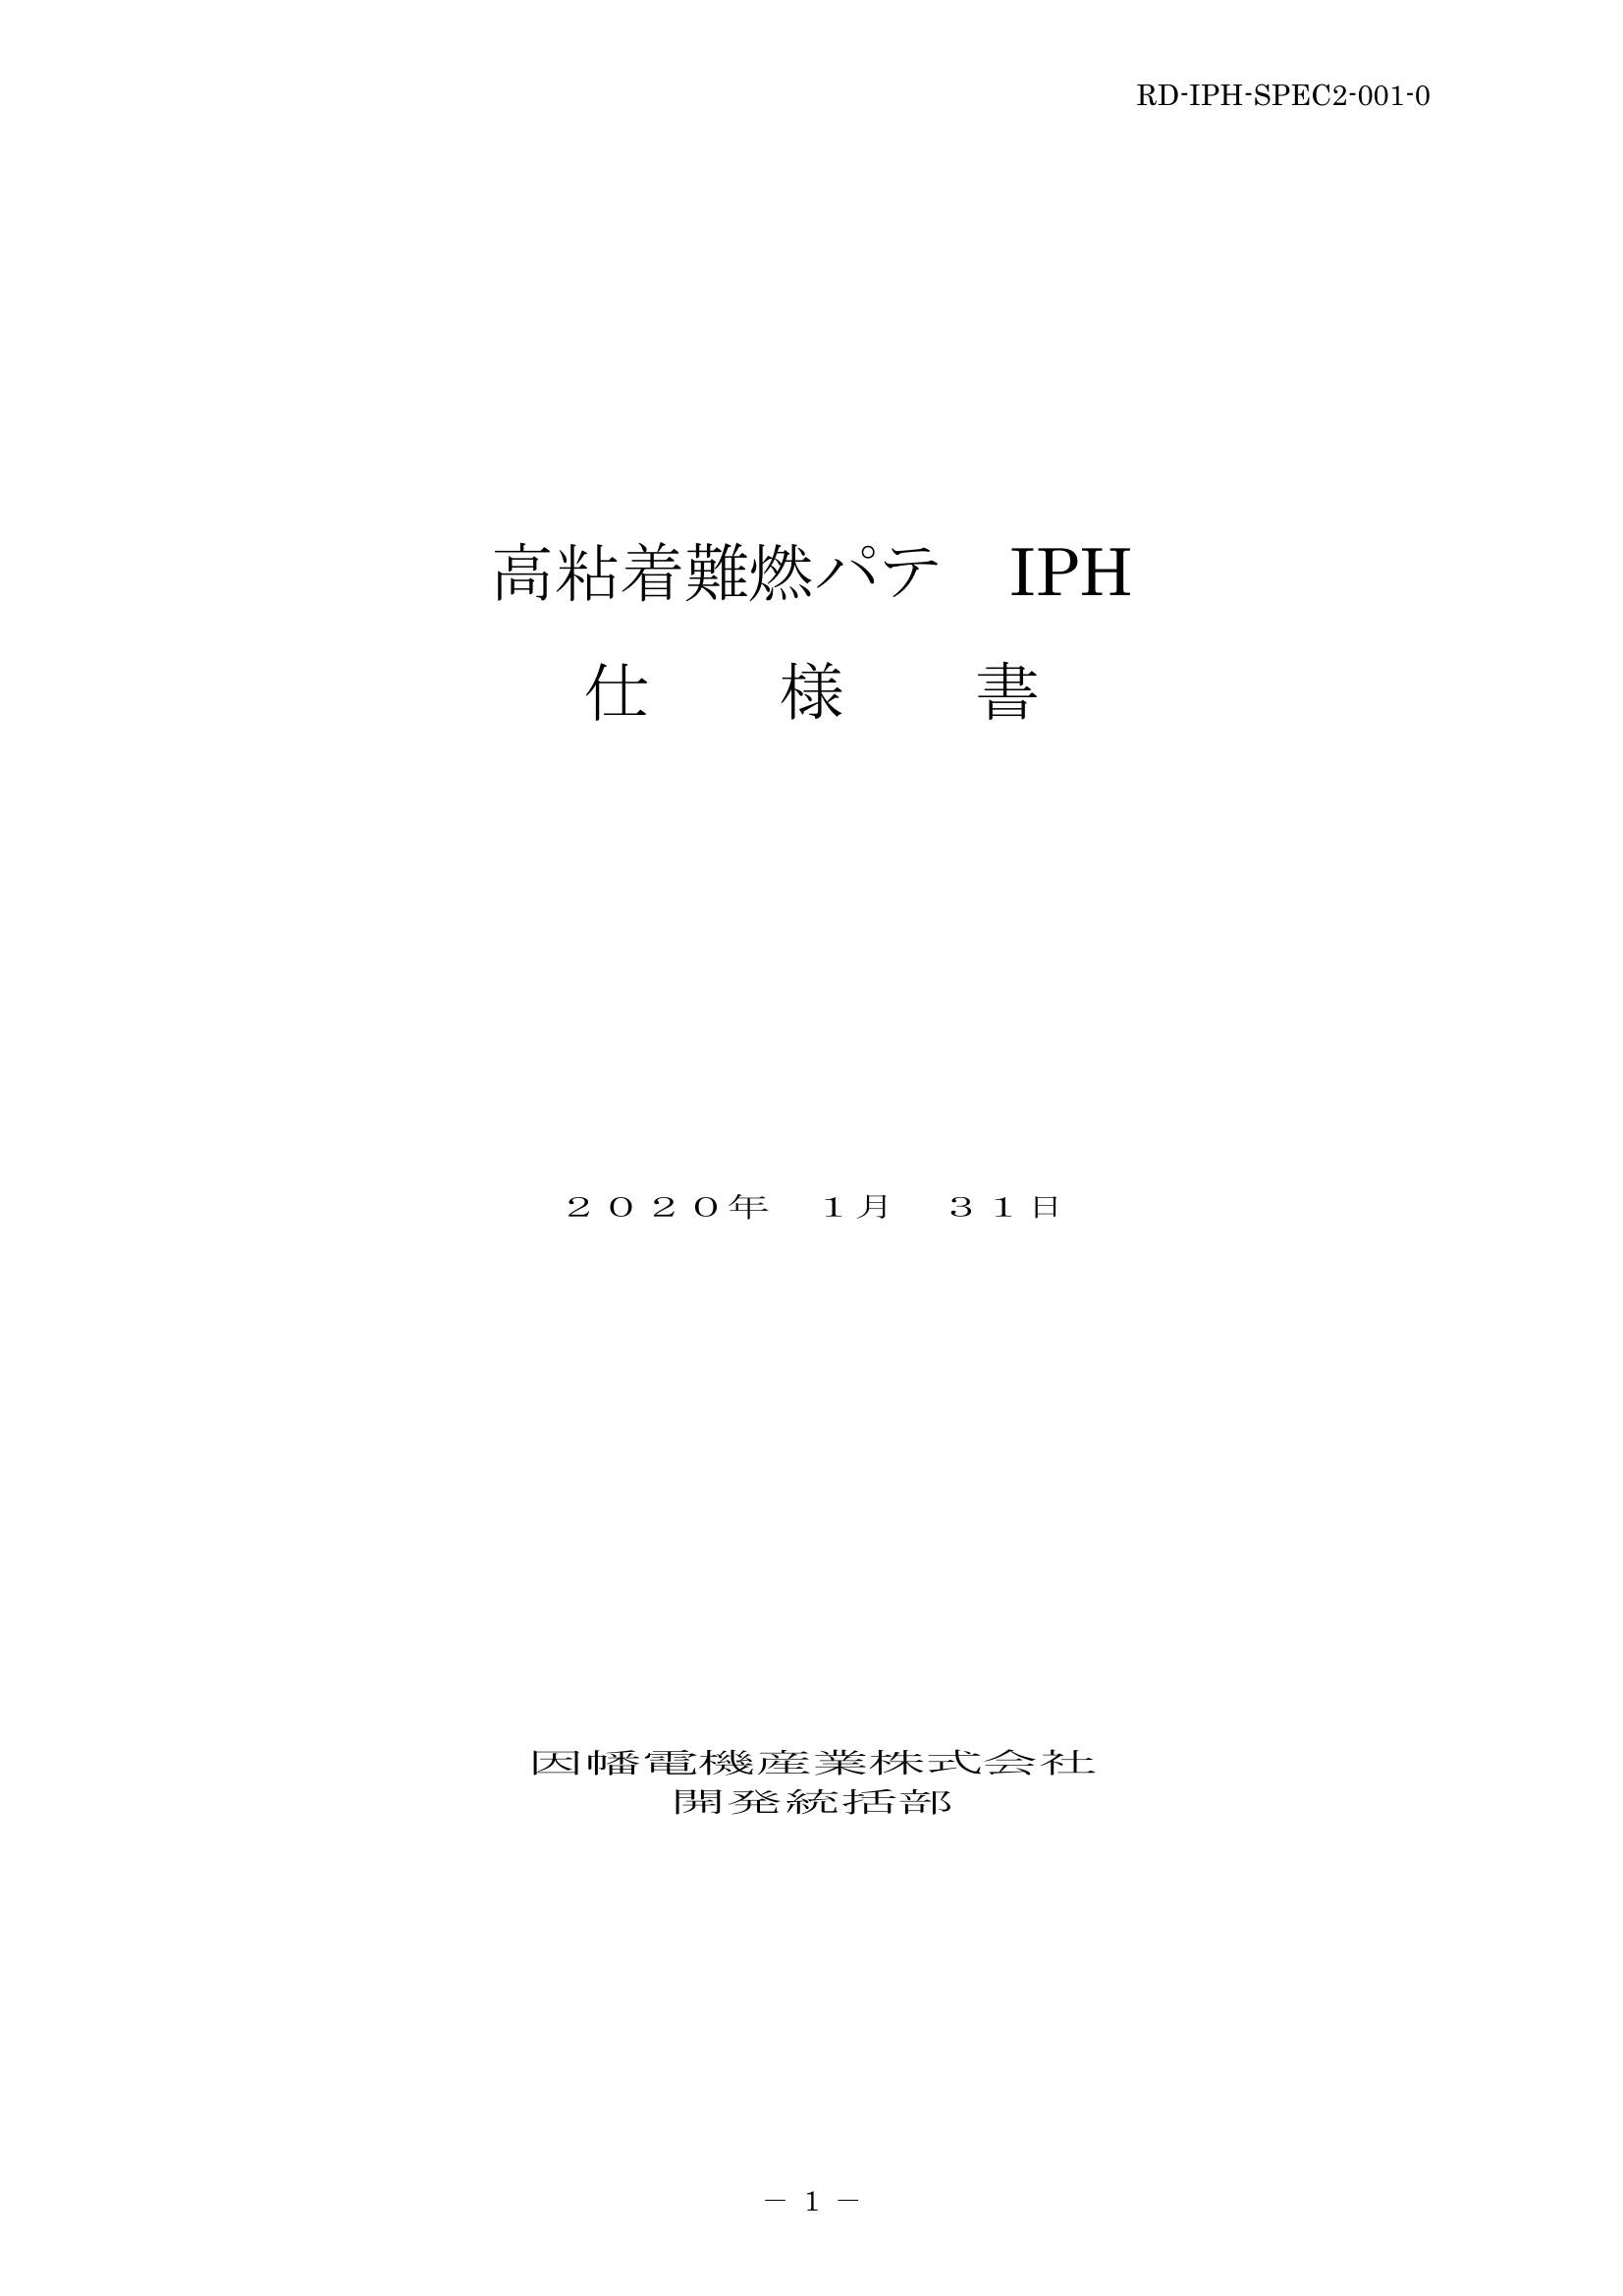 IPH_仕様書_20200131.pdf